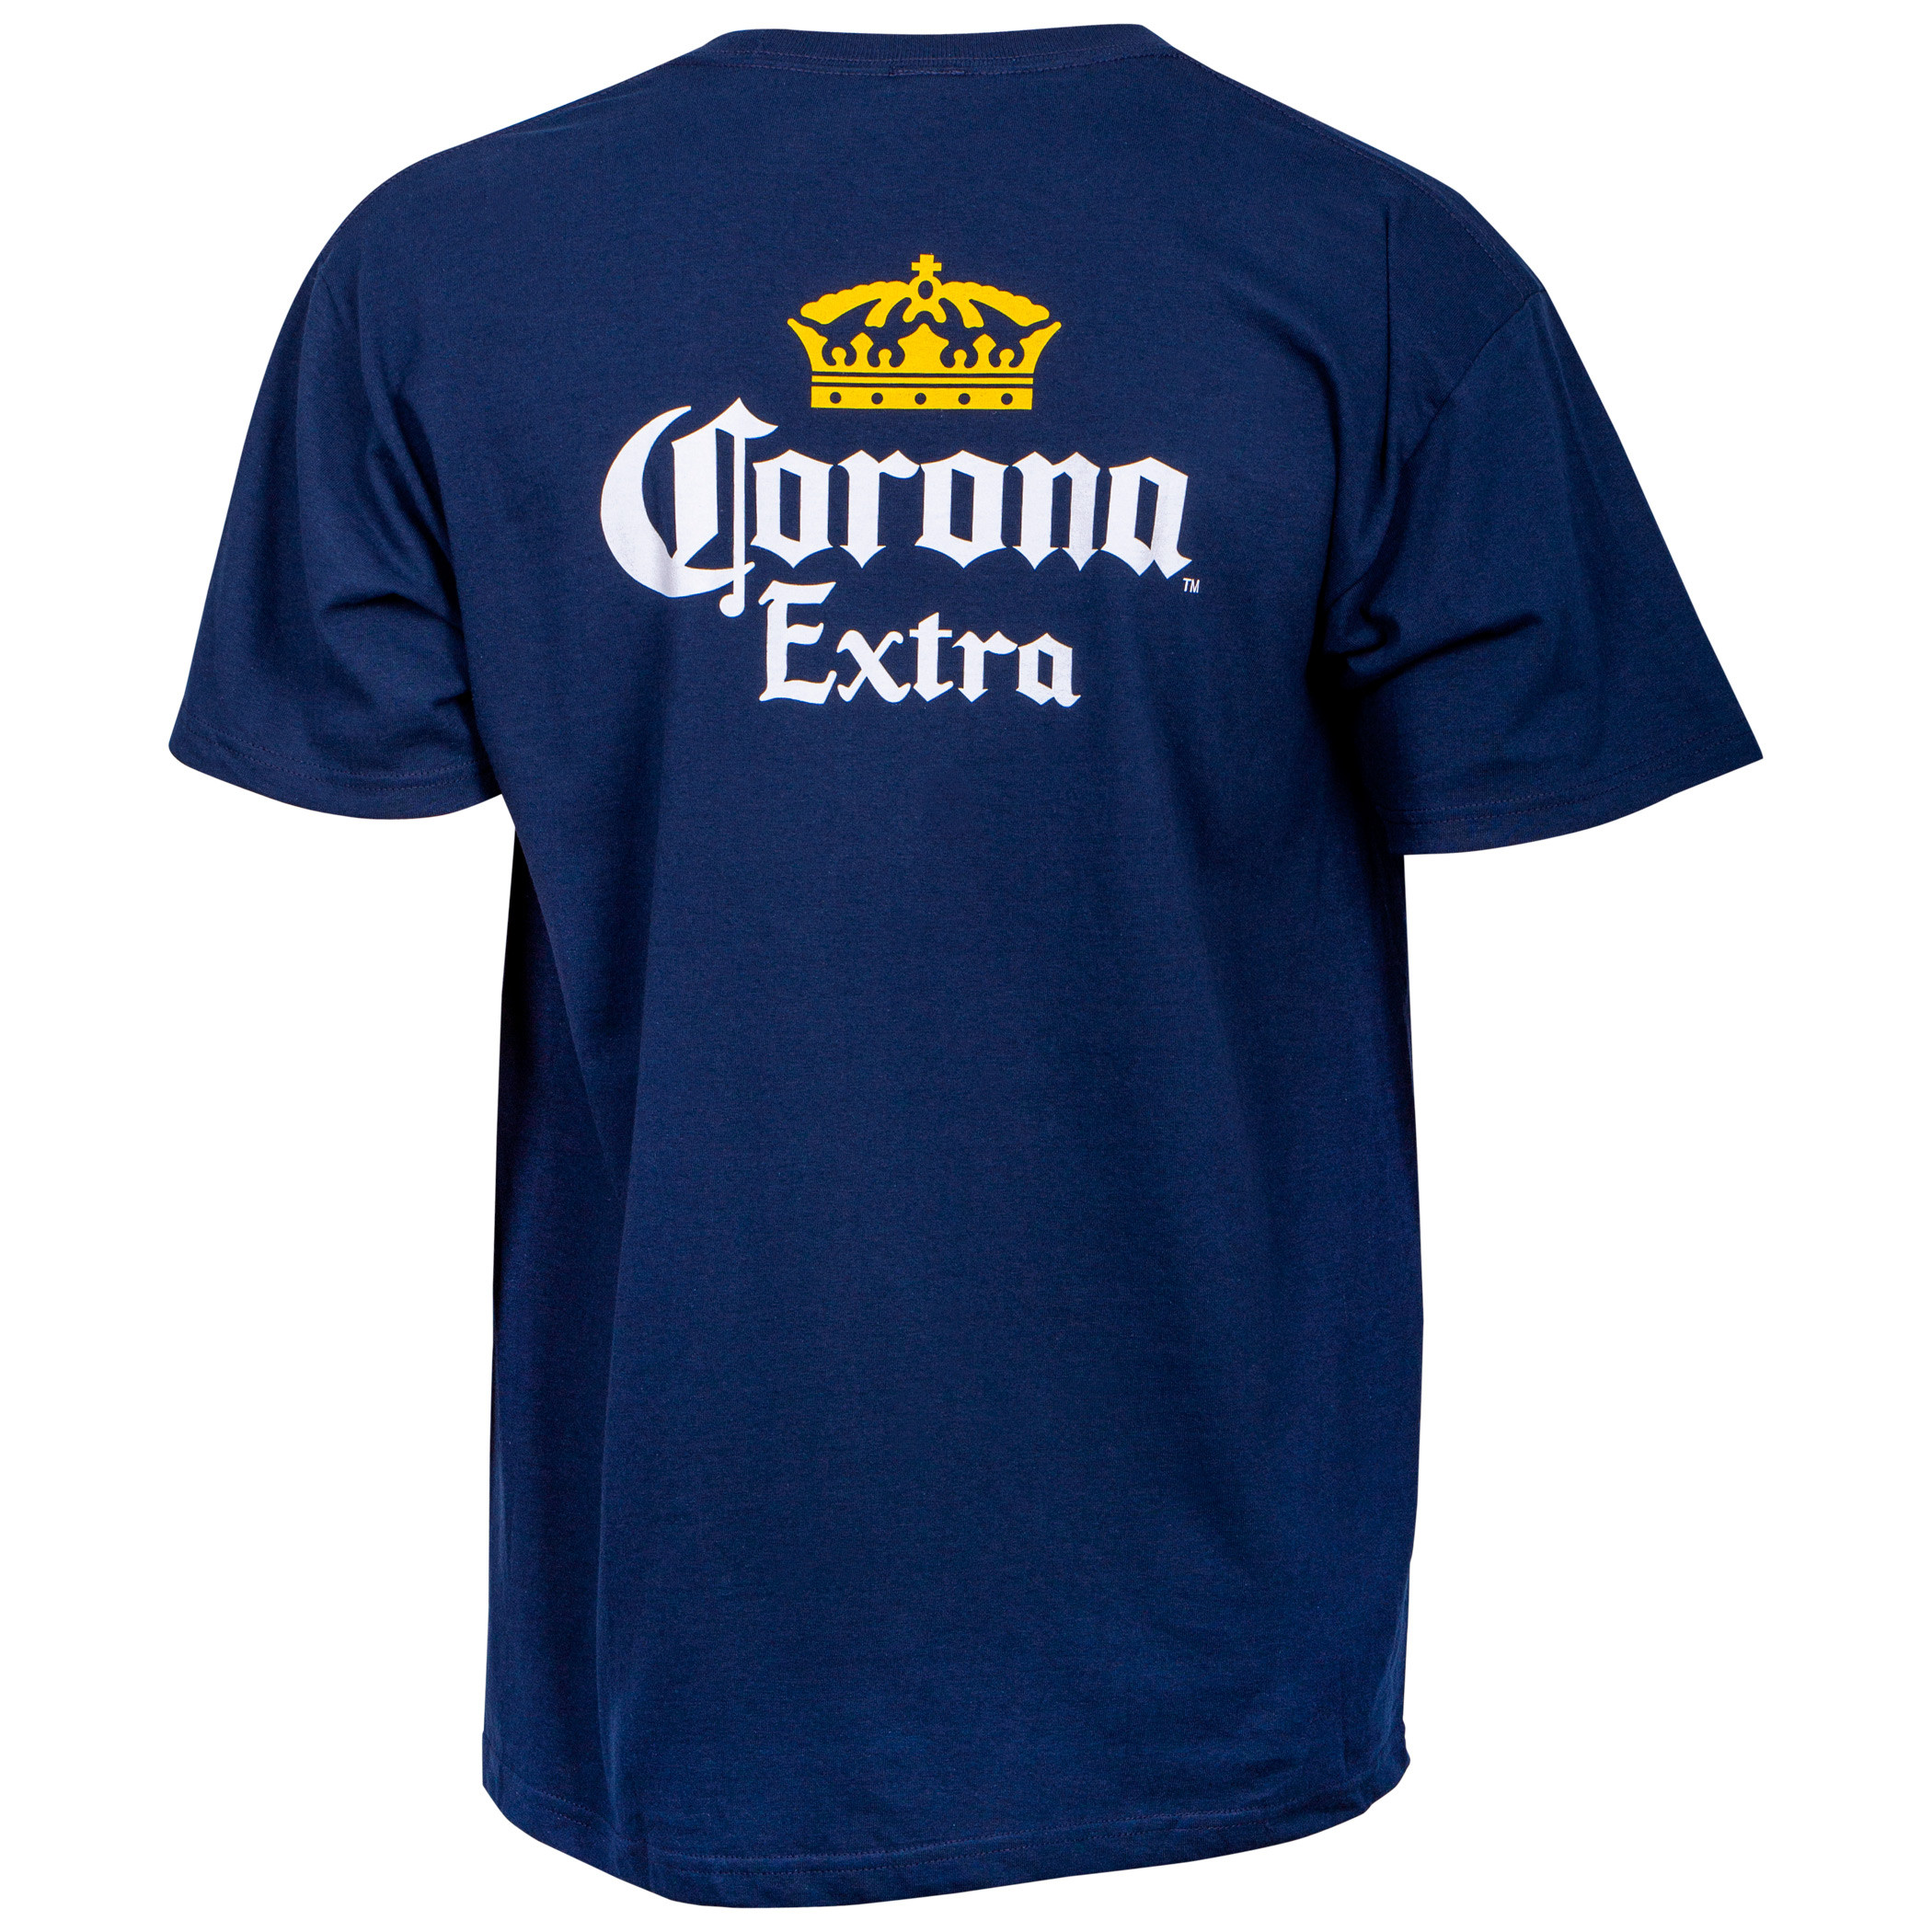 Corona Extra Front and Back Label Pocket T-Shirt